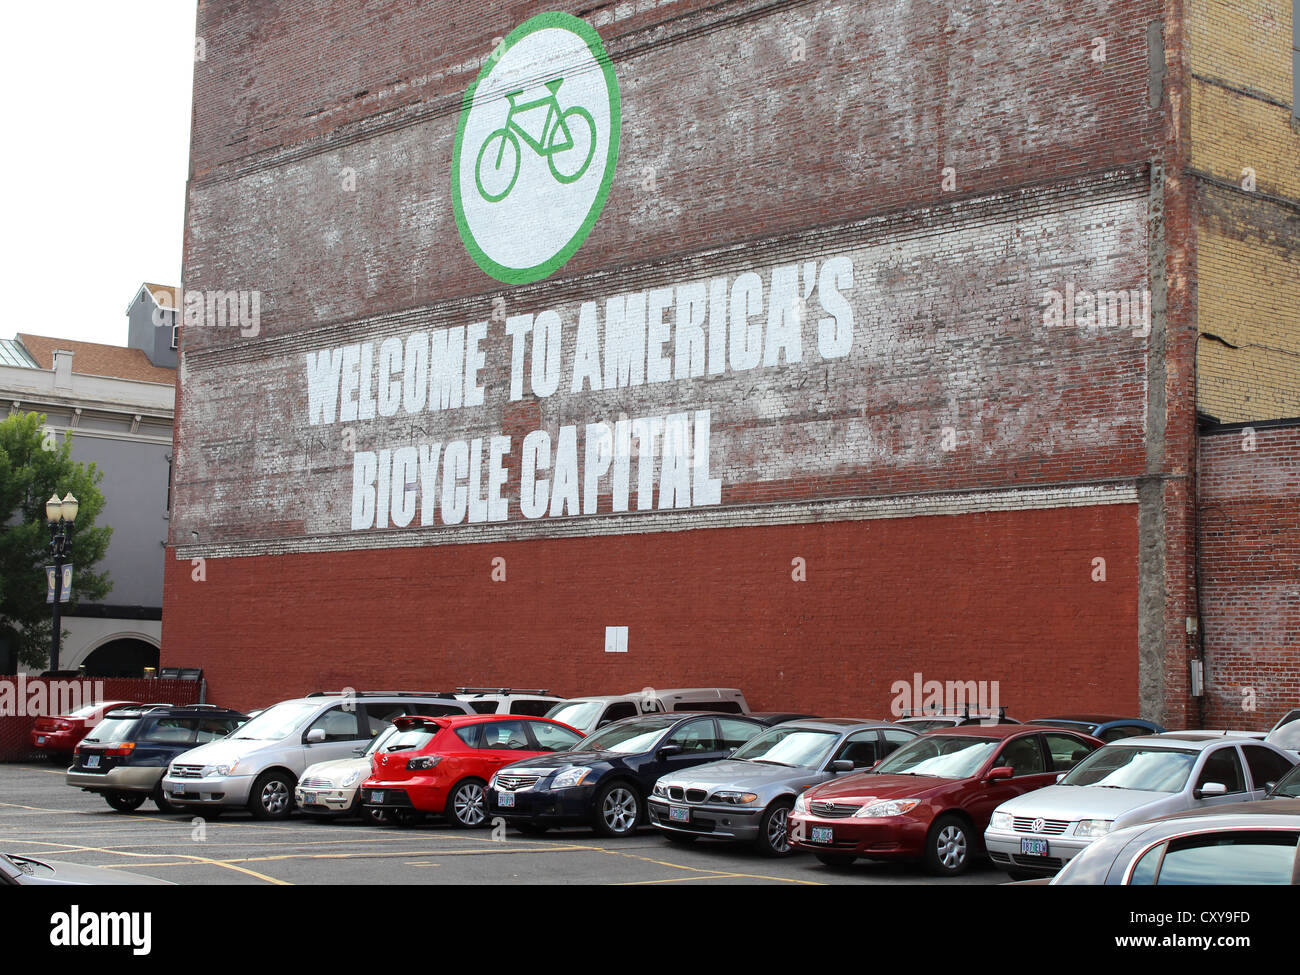 Fahrrad-Hauptstadt anmelden volle Parkplatz, Portland, Oregon, USA Stockfoto